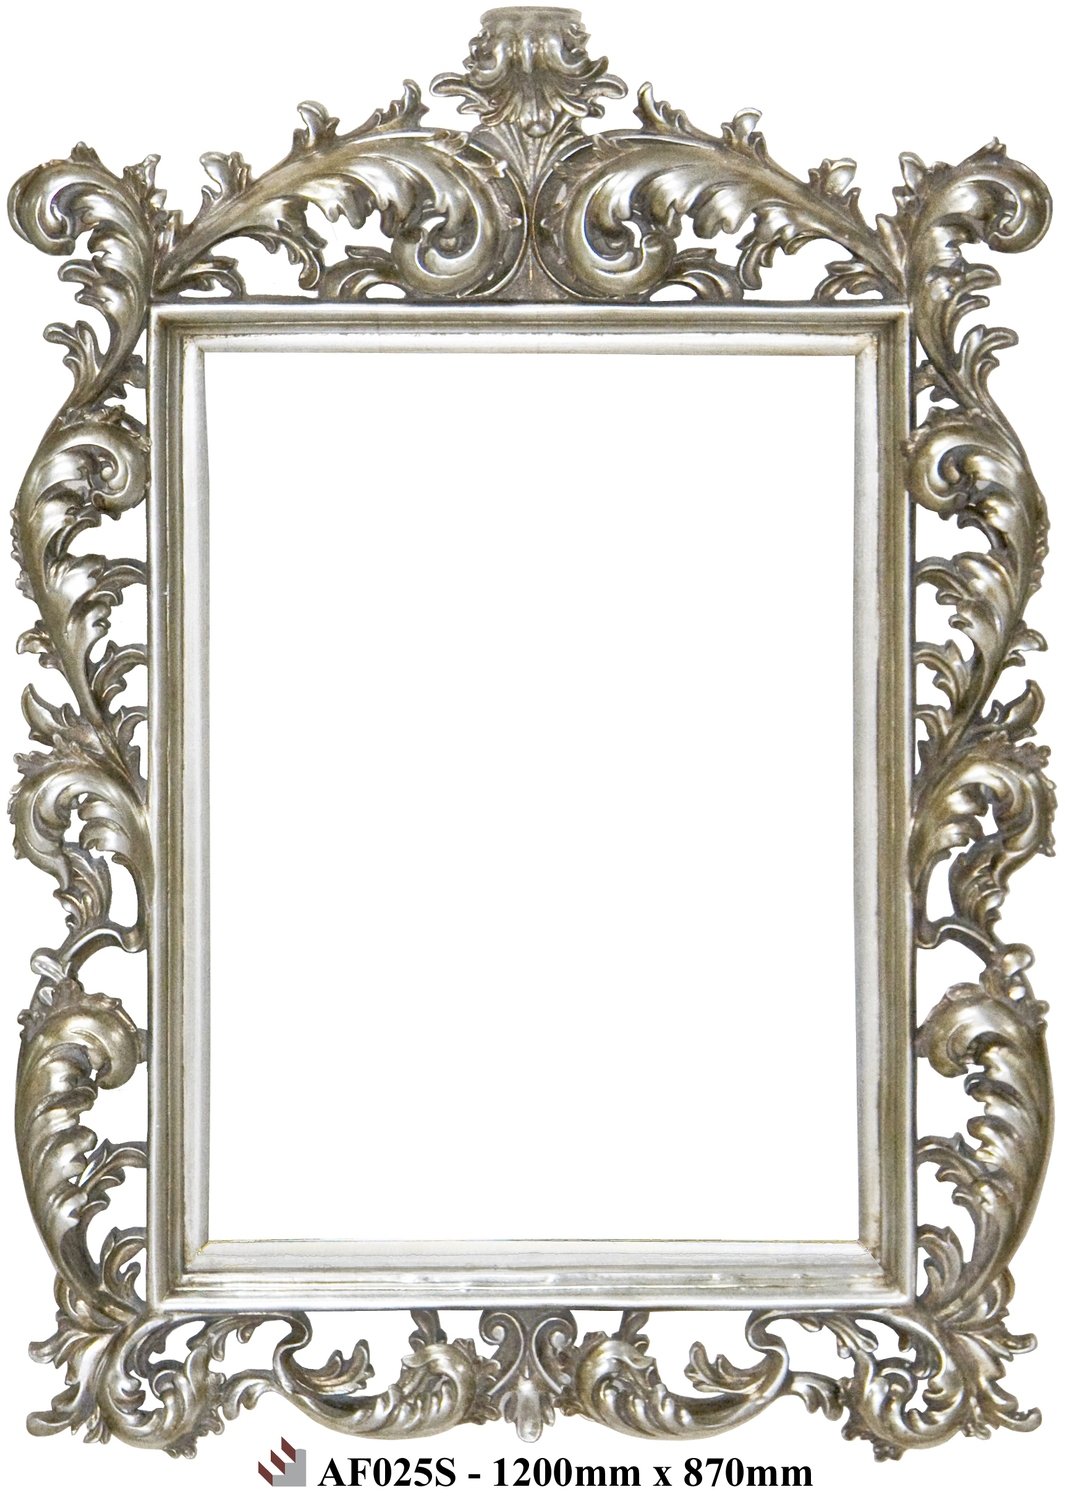 AF025 Antique silver classic mirror